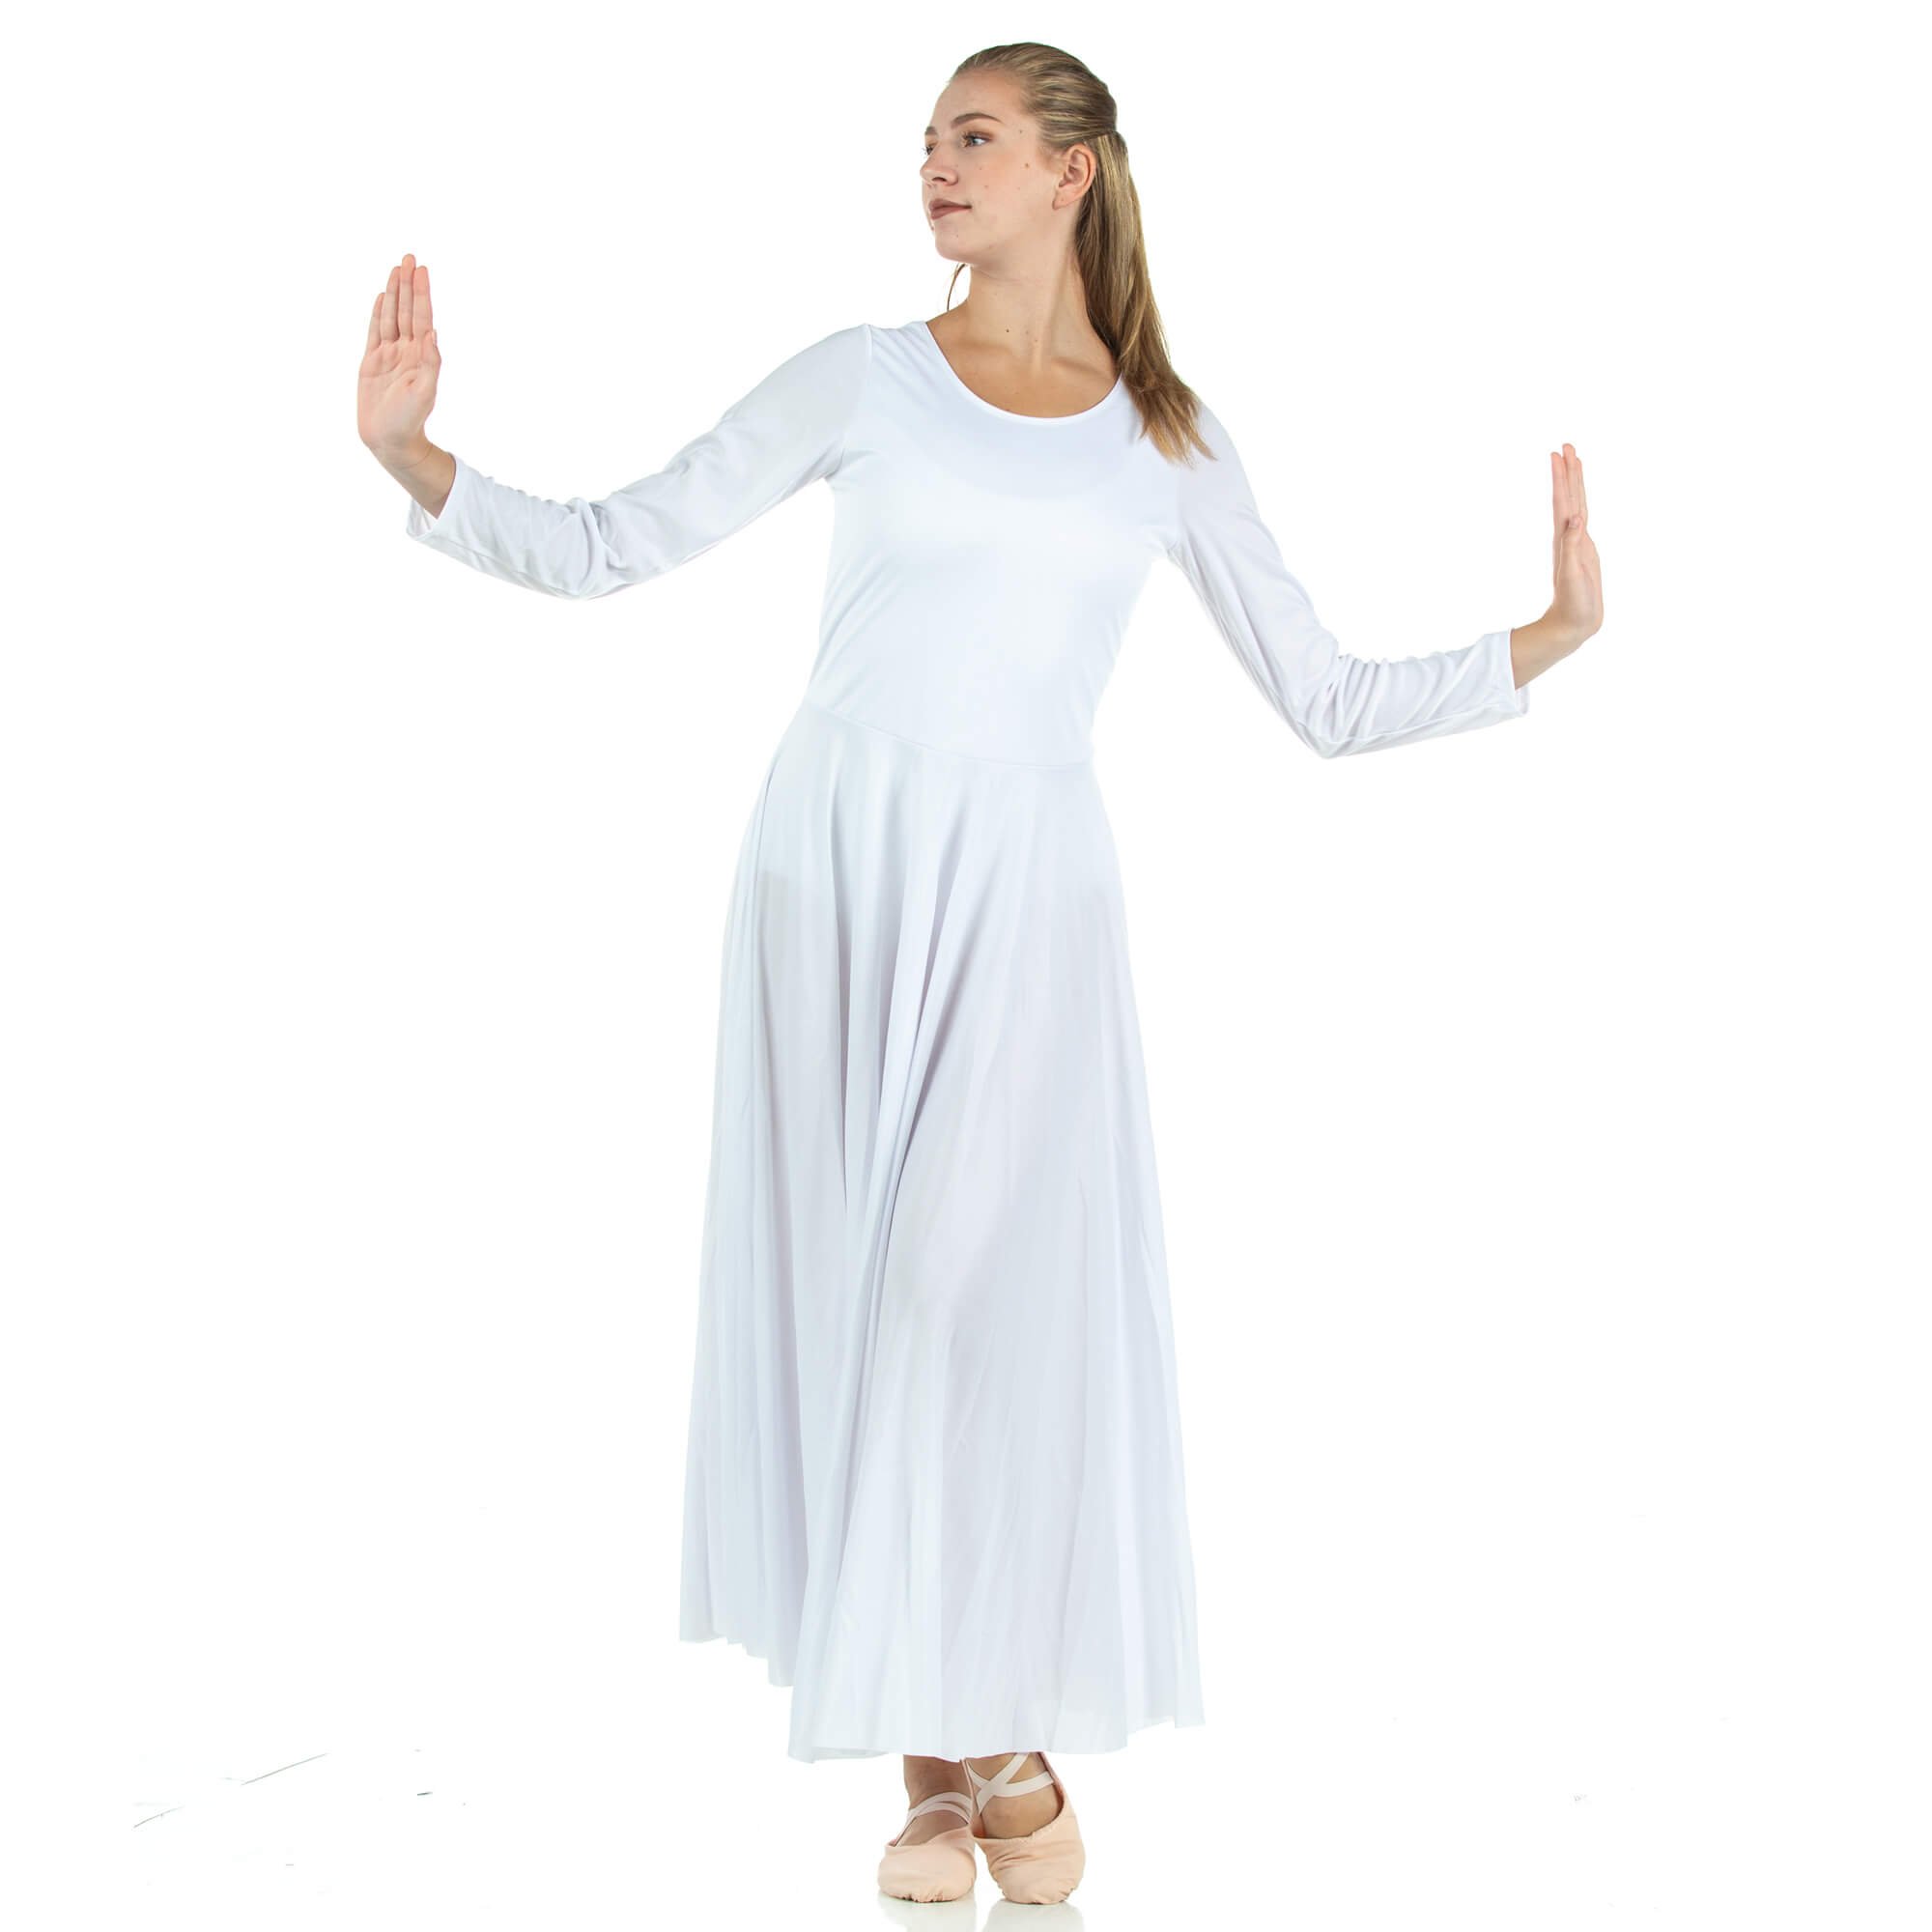 Worship Dancewear: church dresses, praise dance wear, praise dance ...